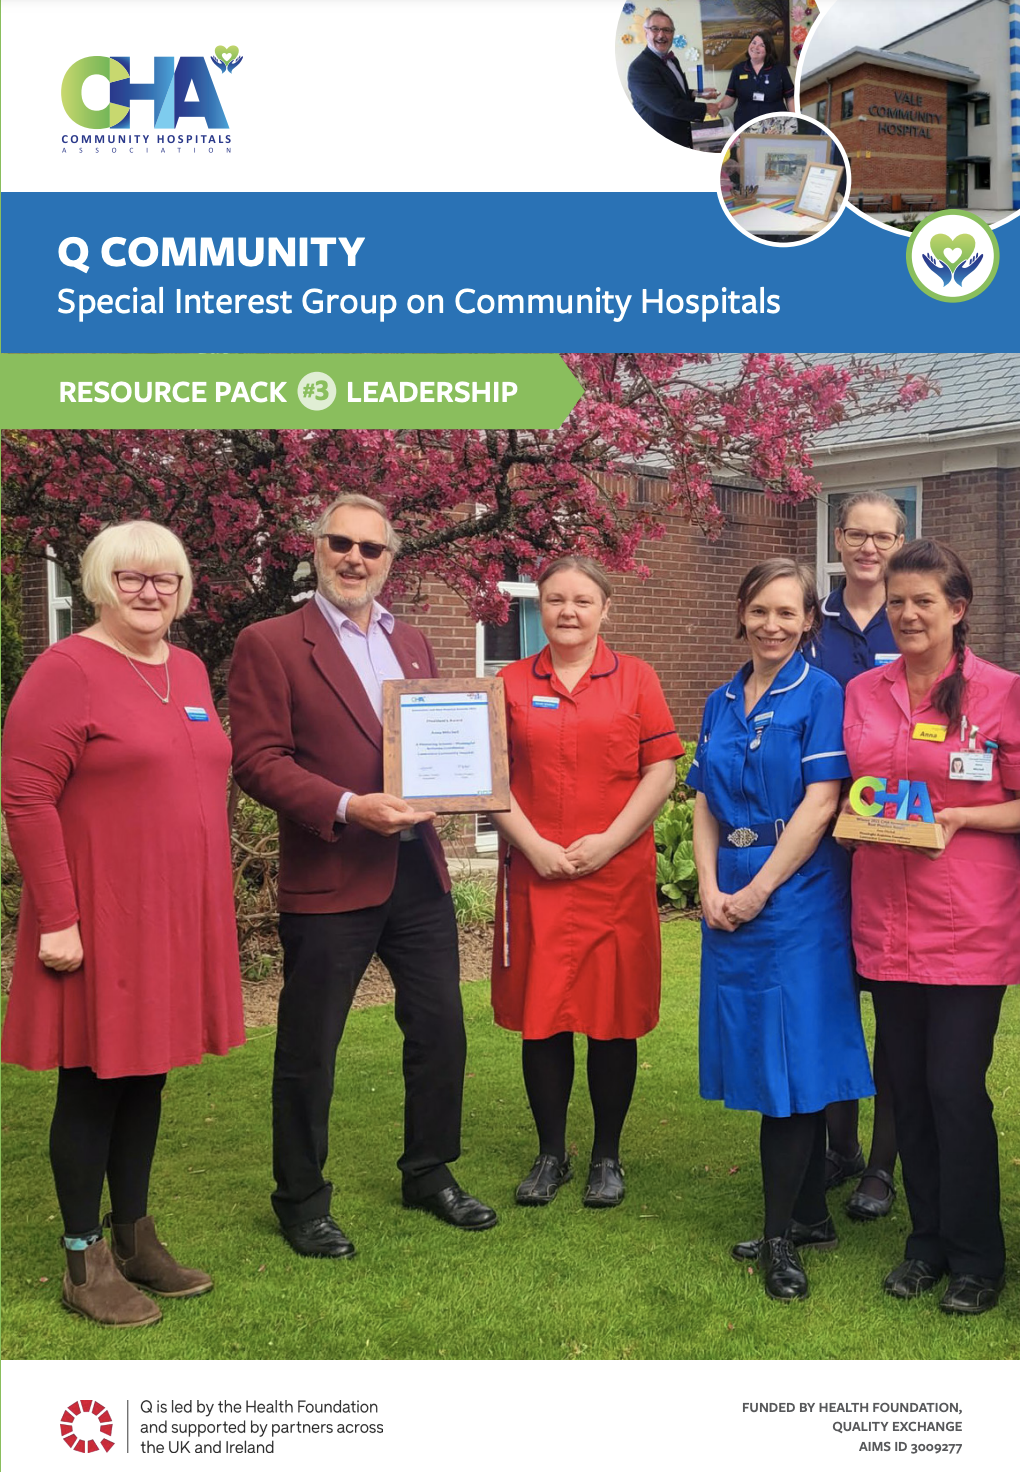 Community Hospital Resource Packs - #3 Leadership featured image